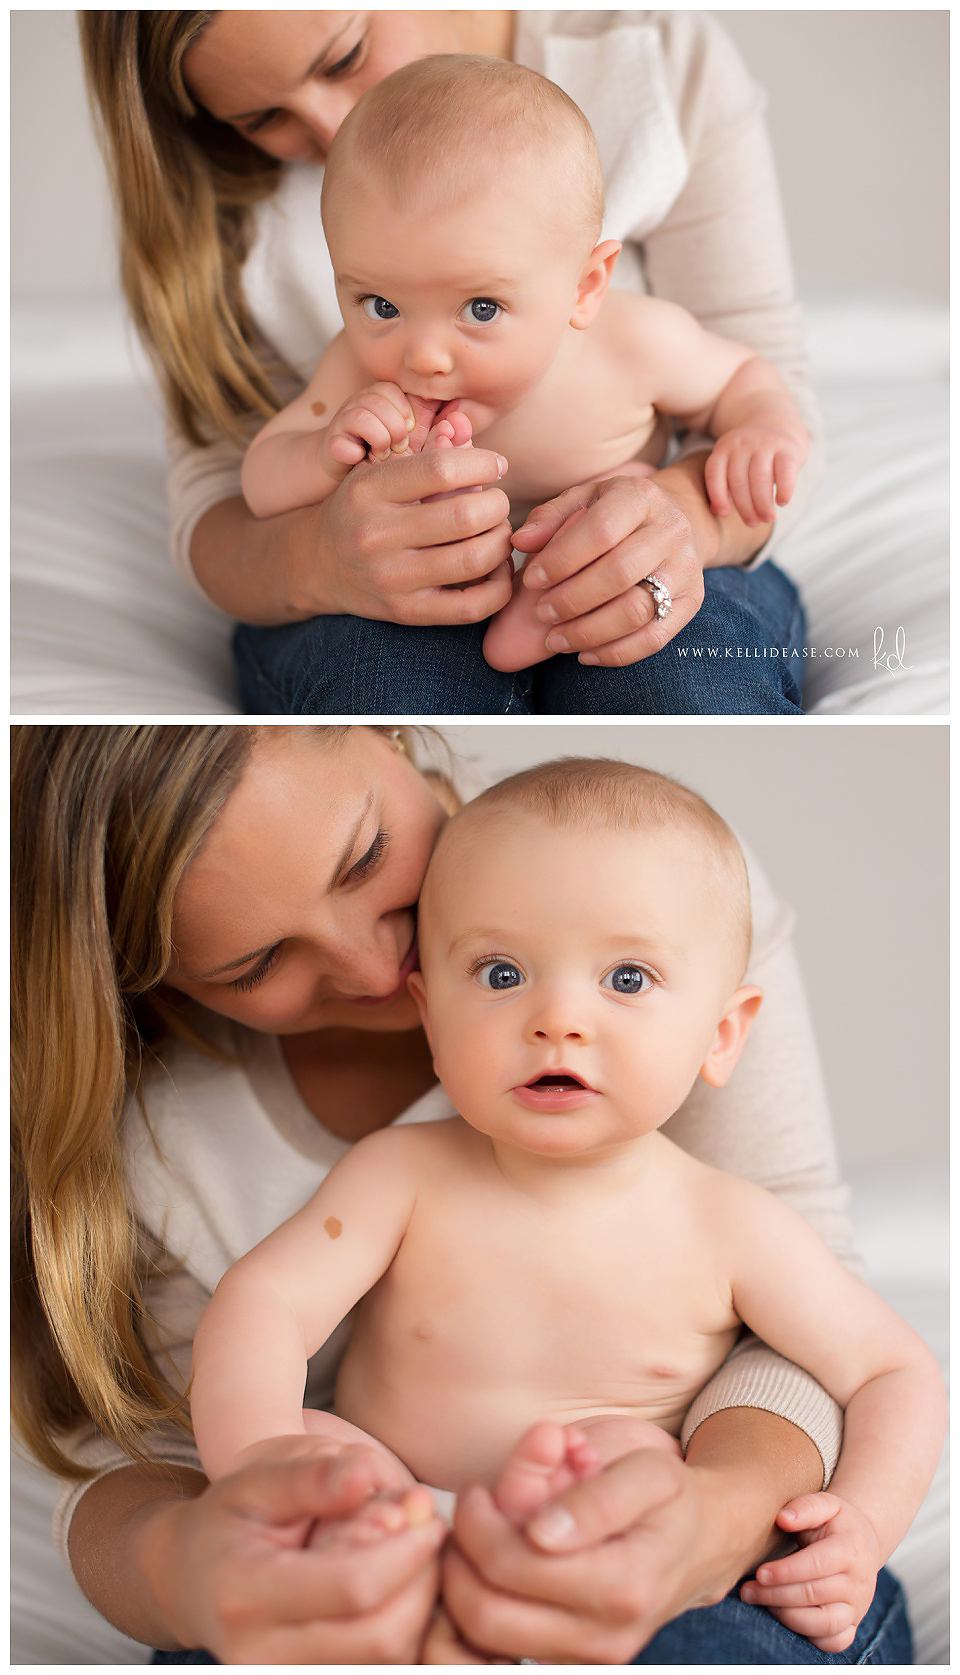 Jack | Hartford baby photographer | Connecticut Newborn Photographer | Babies | Maternity | Families | Children | Kelli Dease | www.kellidease.com